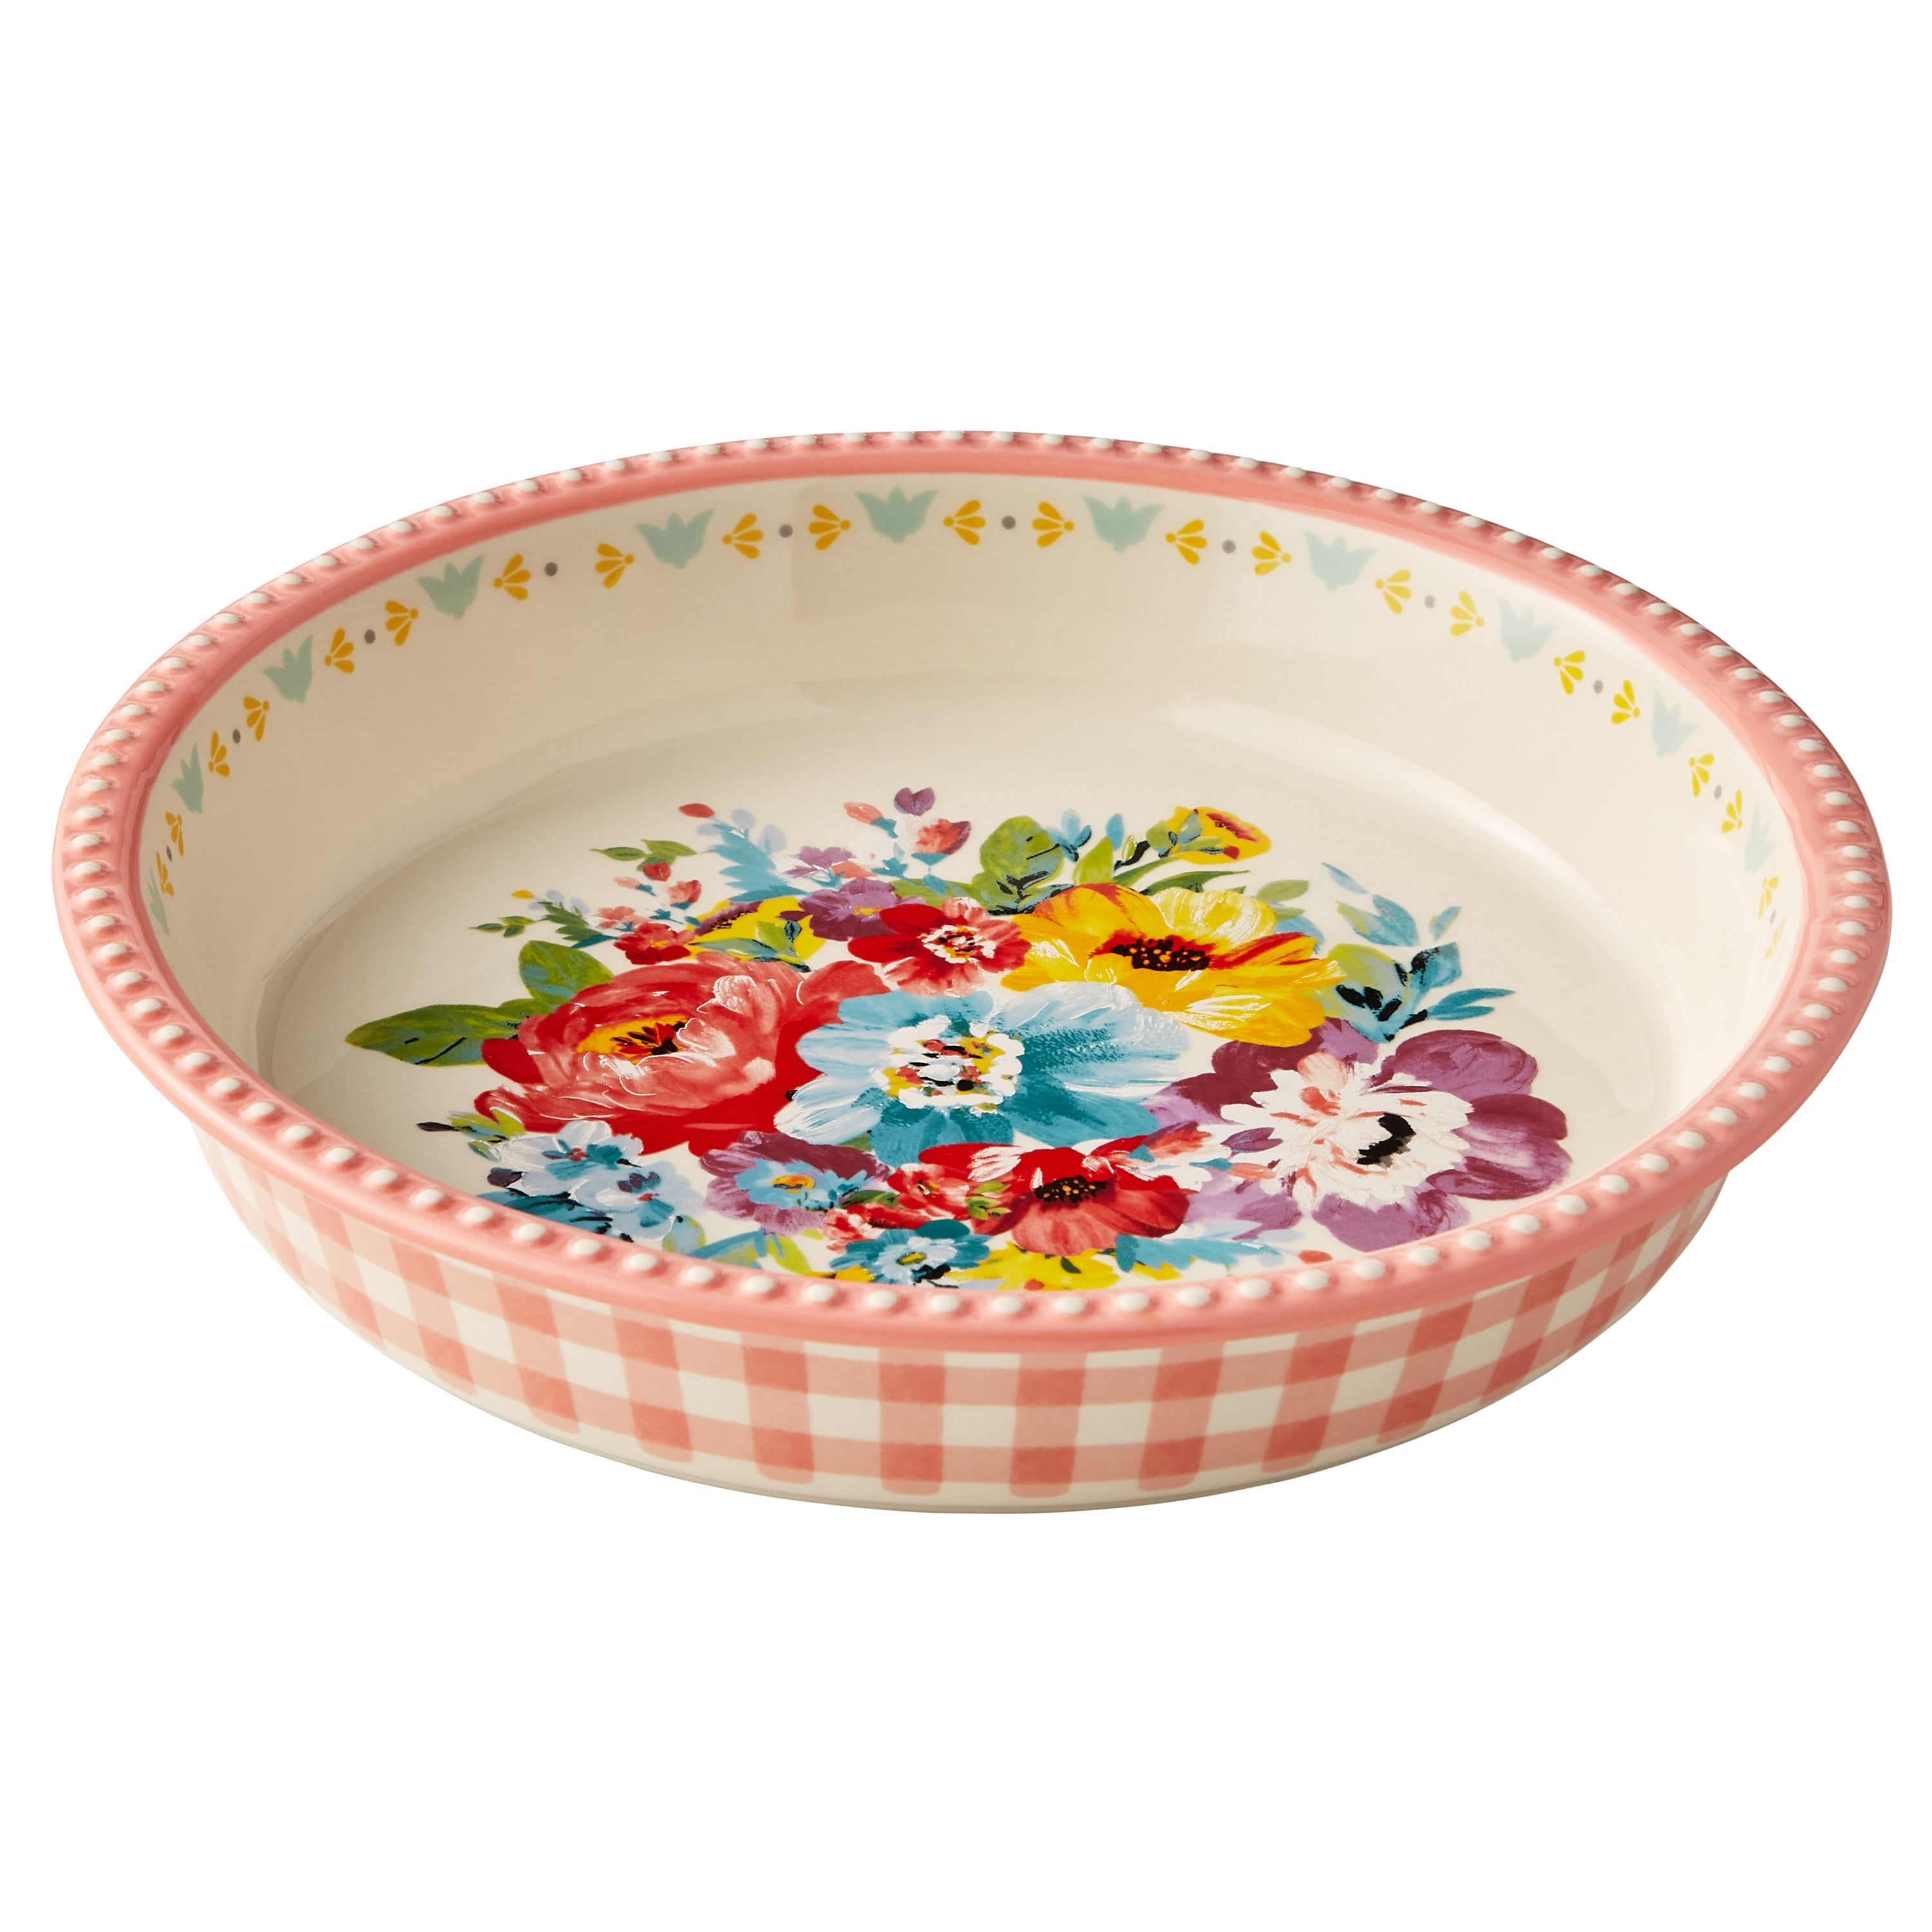 The Pioneer Woman Sweet Romance Blossoms 9-inch Ceramic Pie Plate -  Walmart.com